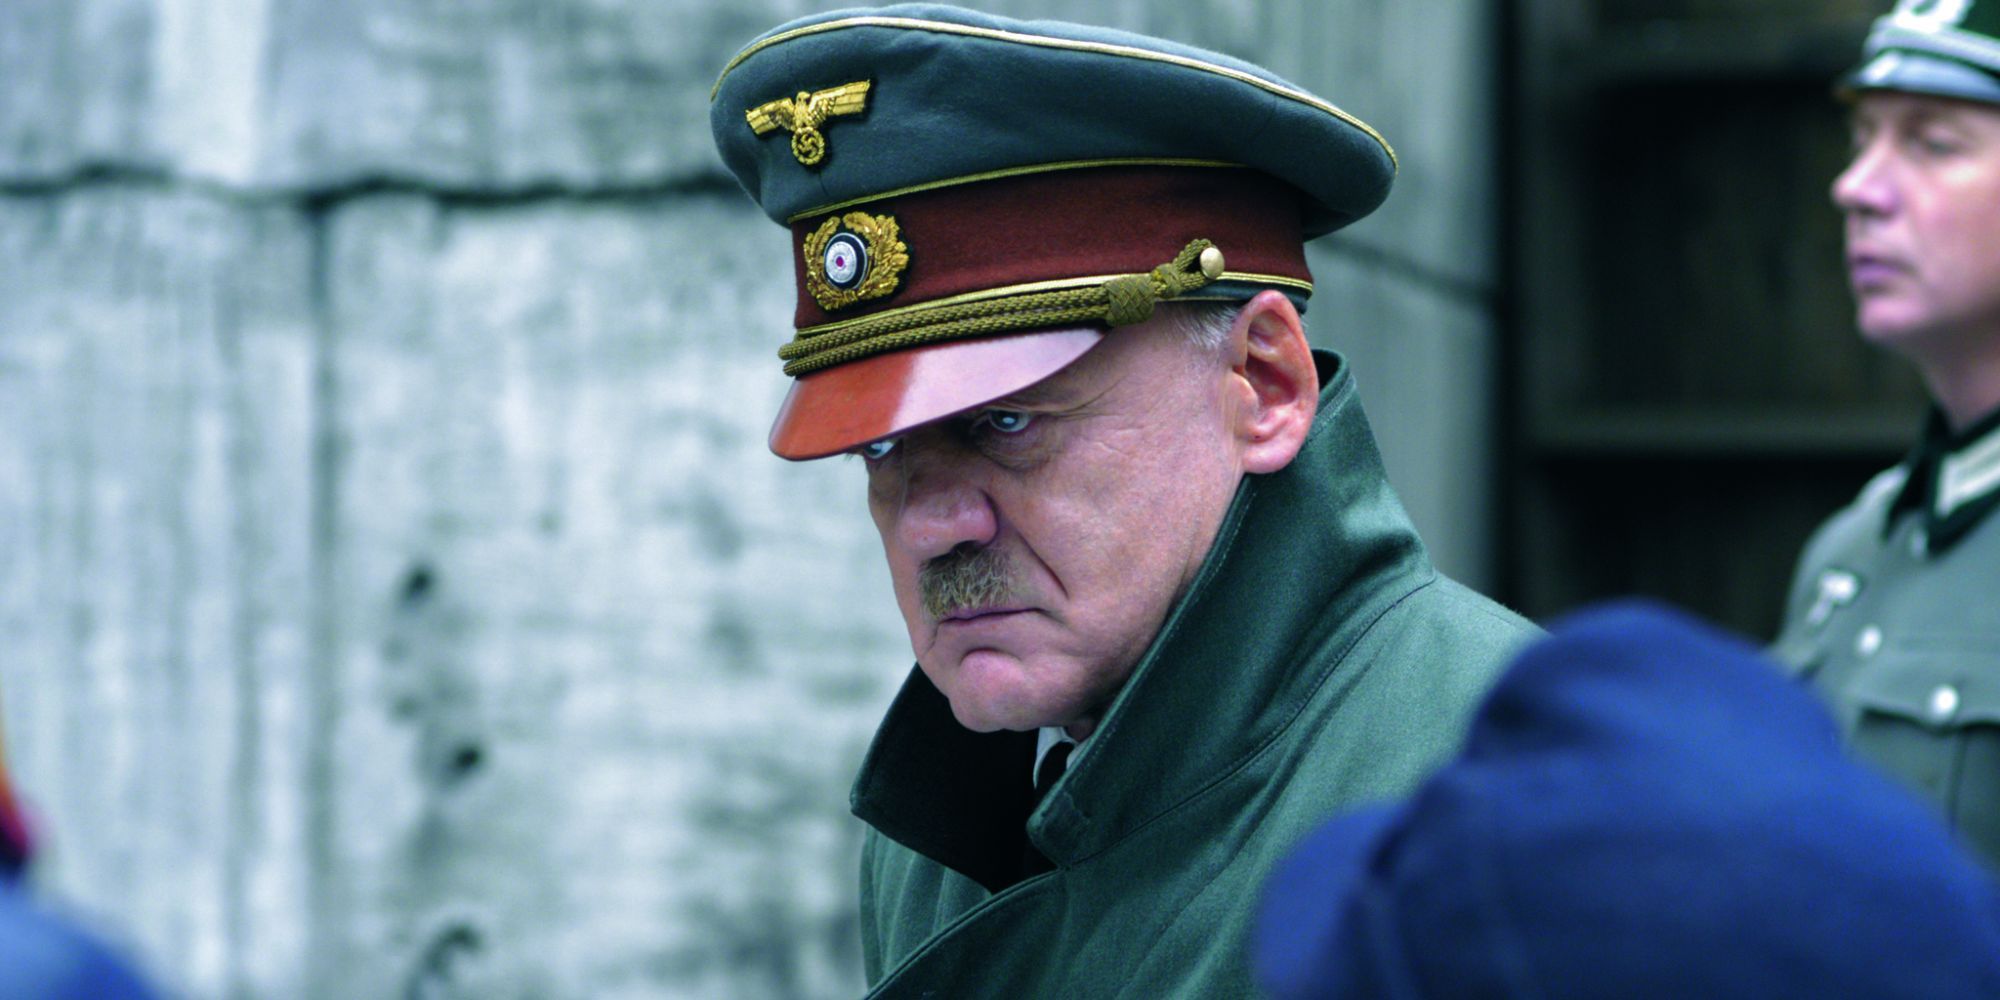 Bruno Ganz as Adolf Hitler looking grim in Downfall’ (2004)